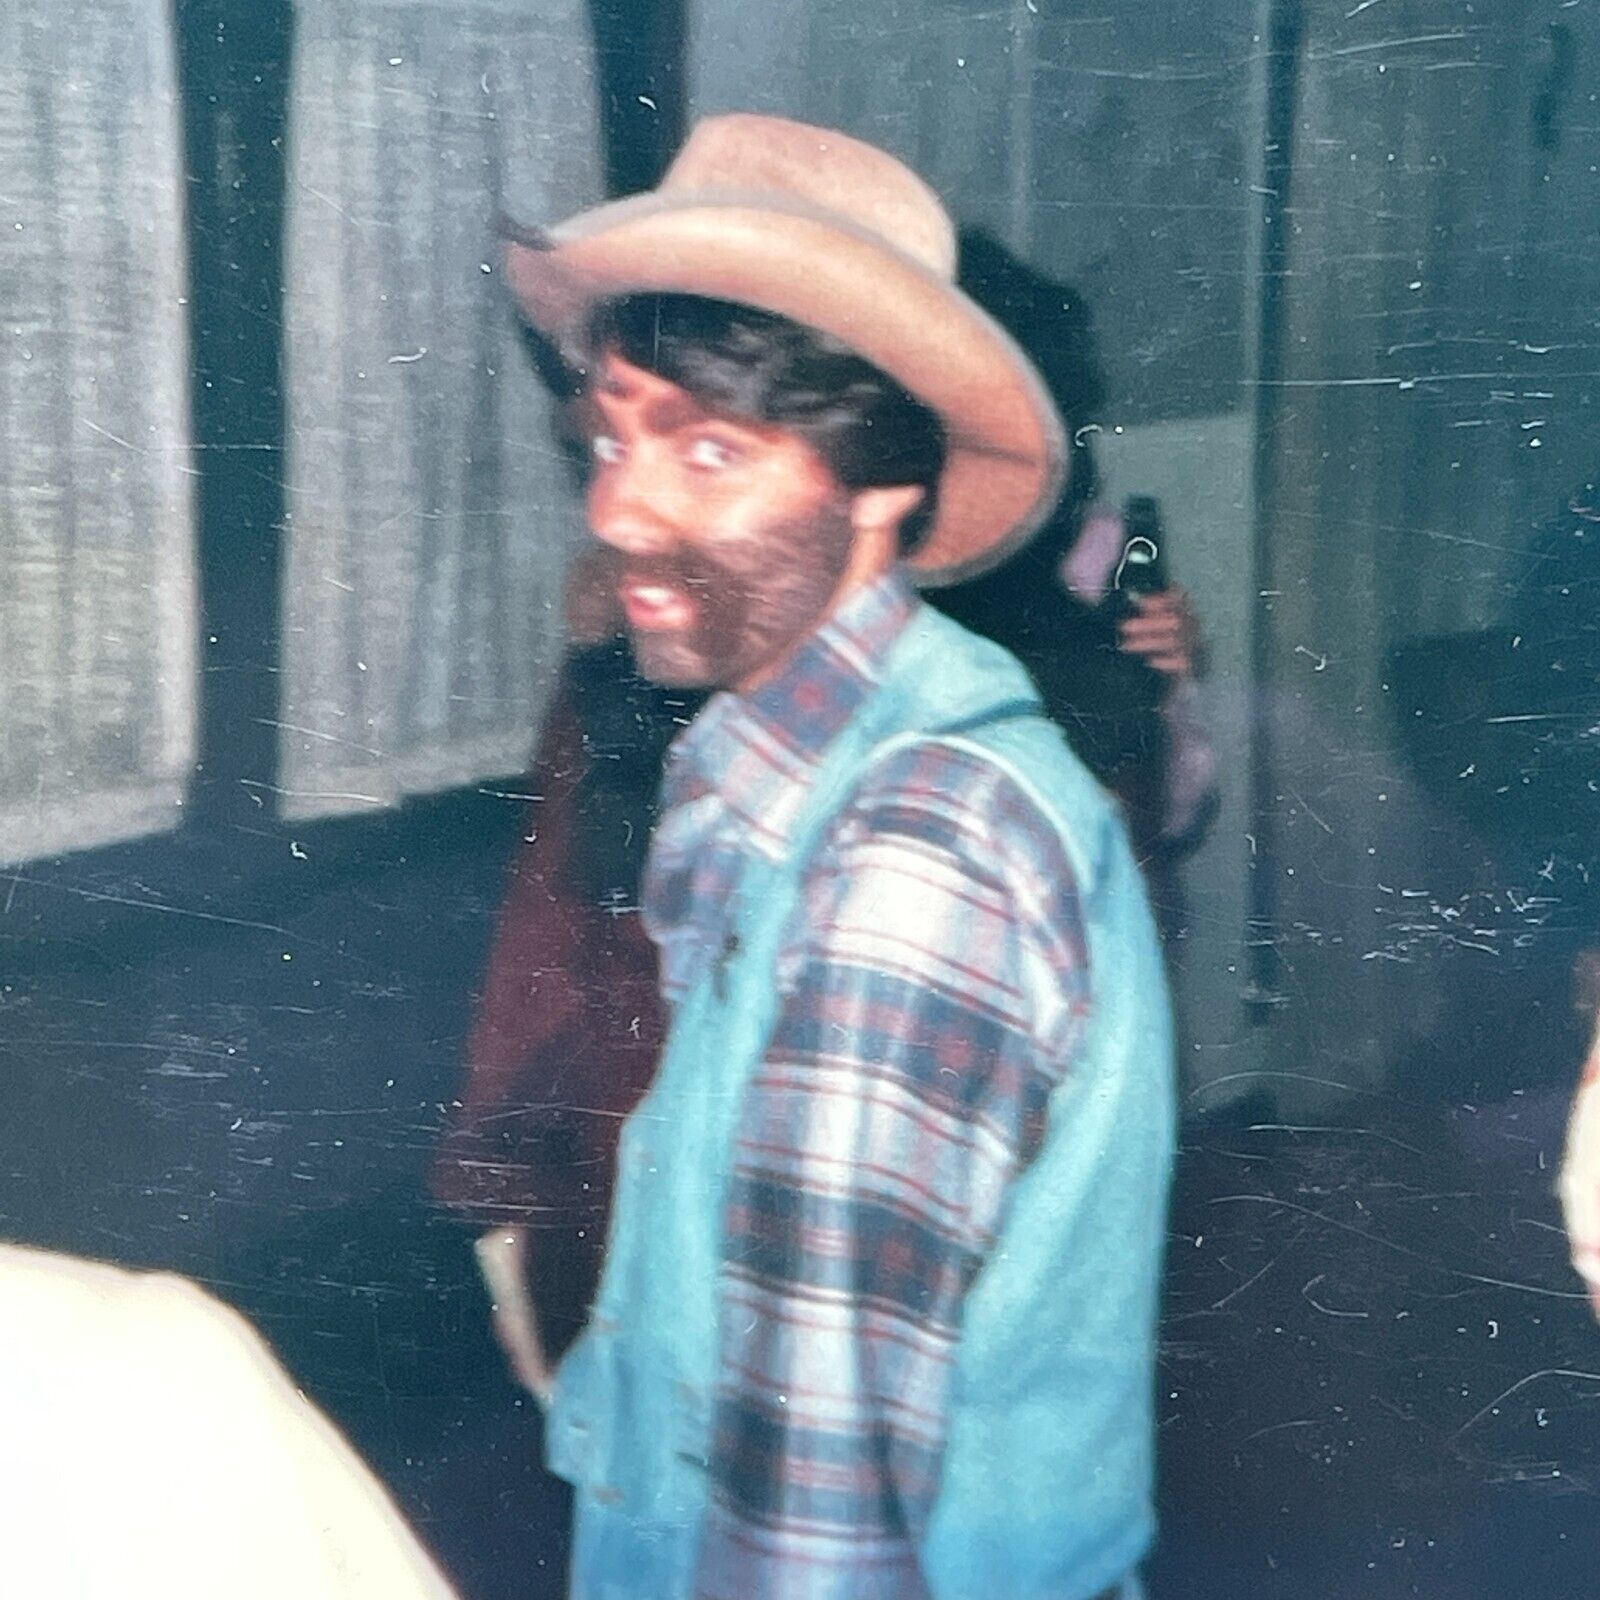 QA Photograph Polaroid 1979 Woman Dressed Up As Farmer Beard Hat Surprise